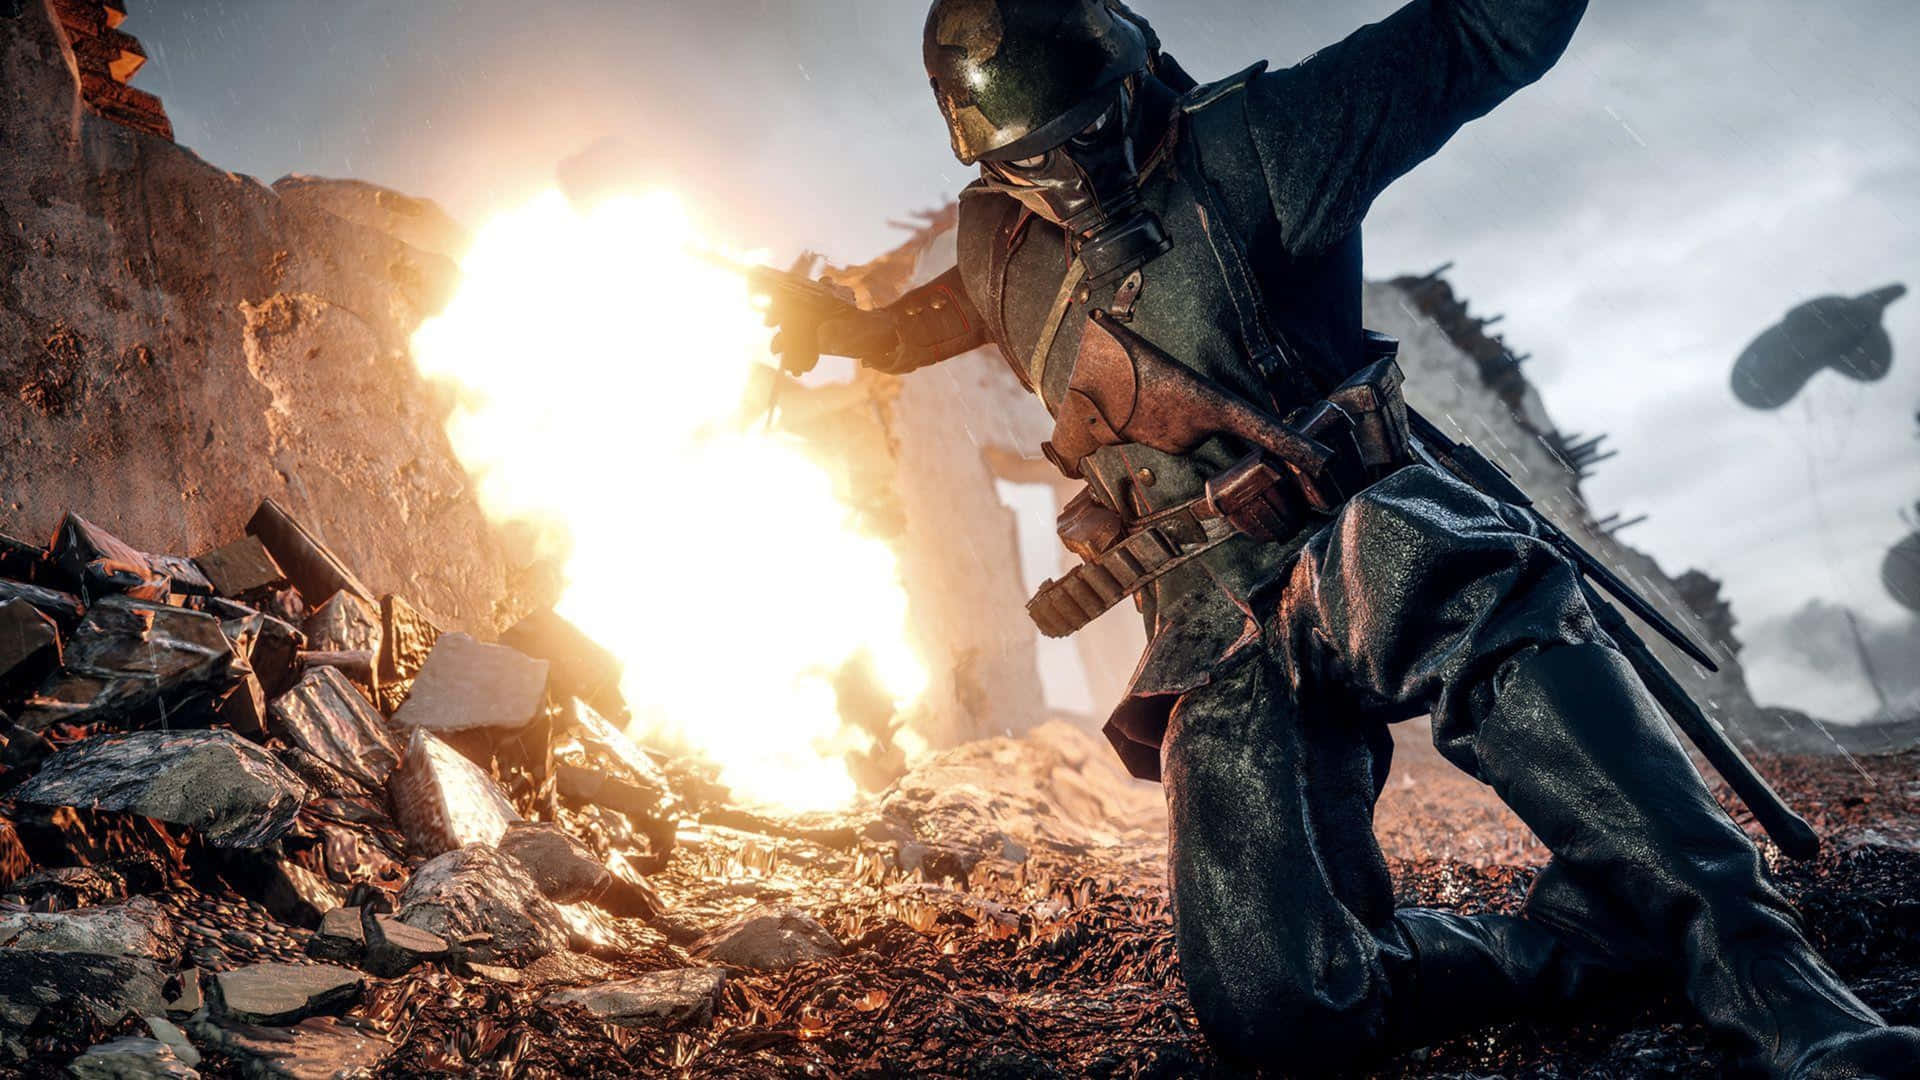 1440psfondo Battlefield 1 Con Un'esplosione Durante Un Salto